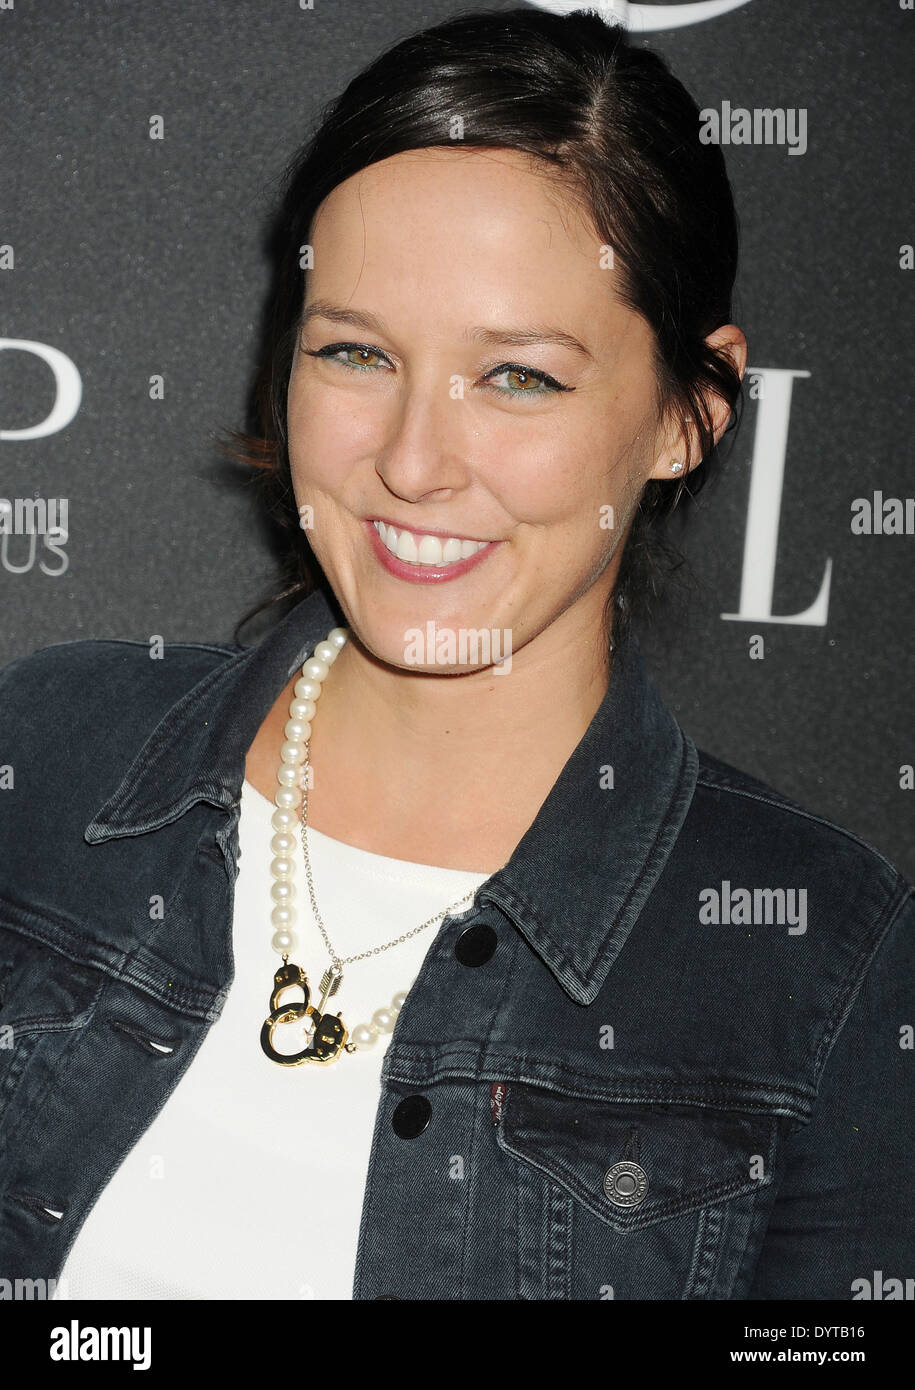 US film actress in April 2014. Photo Jeffrey Mayer Stock Photo - Alamy